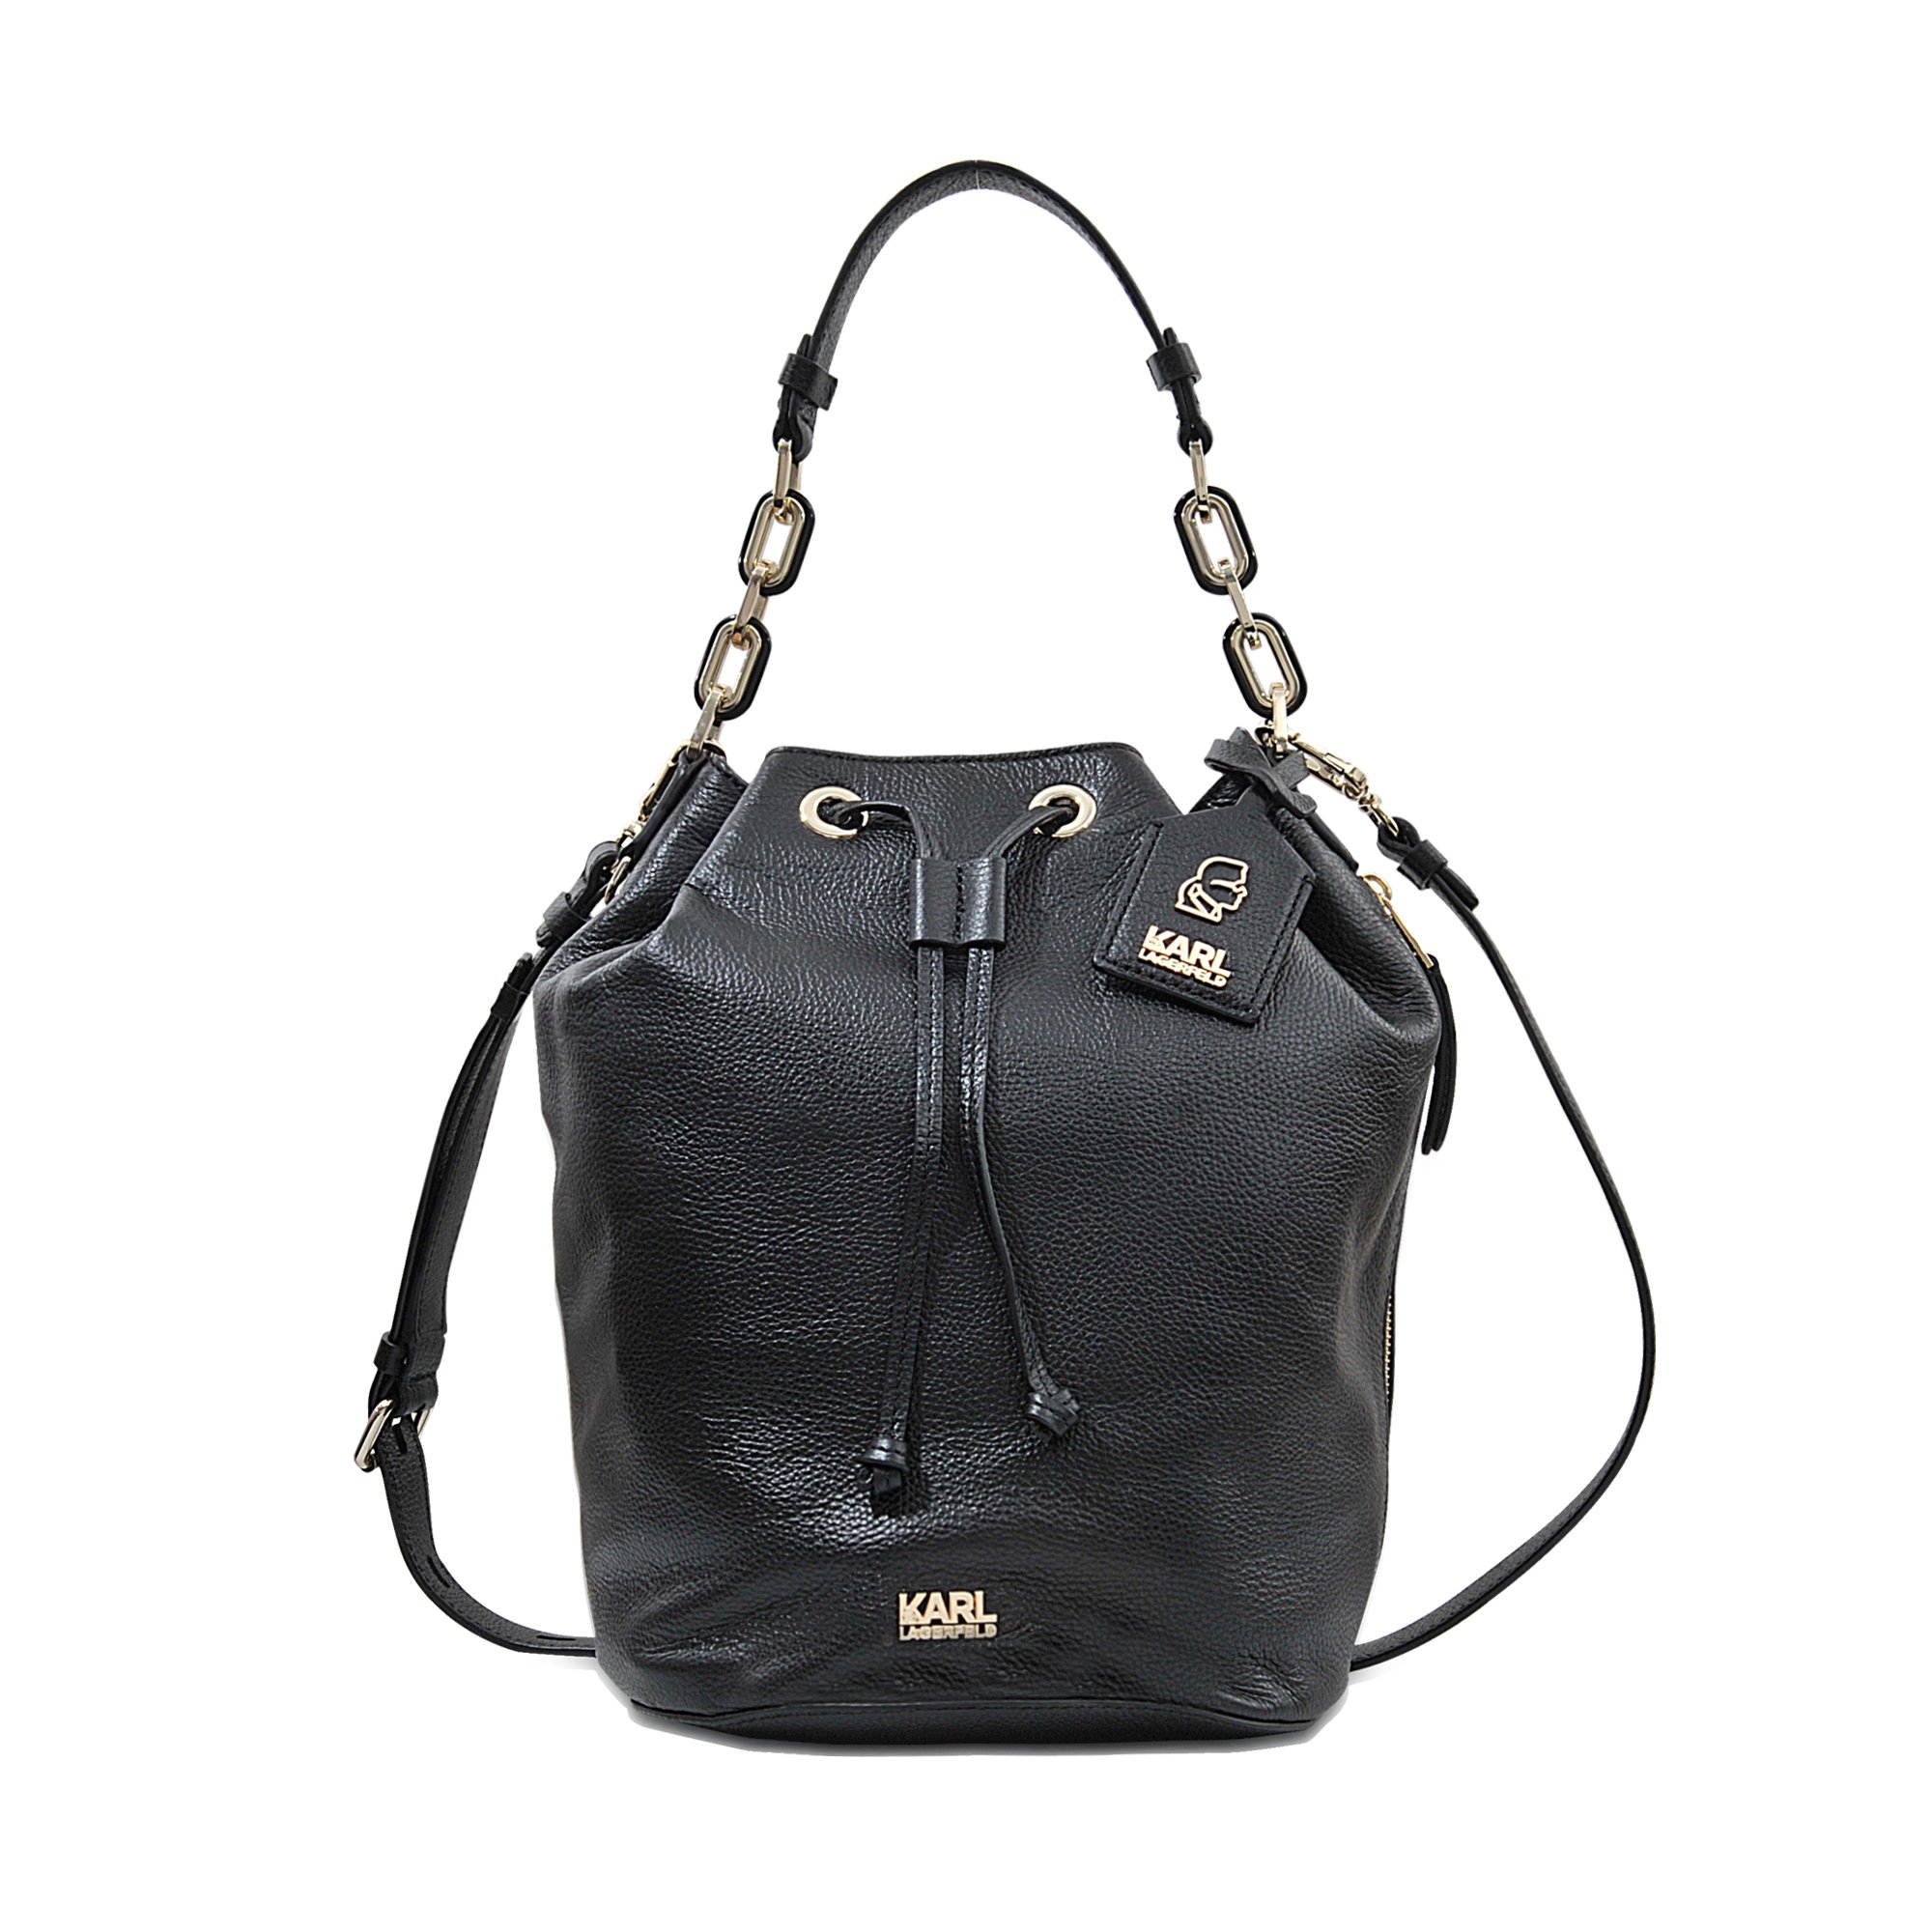 Karl Lagerfeld K Grainy Bucket Bag in Black - Lyst